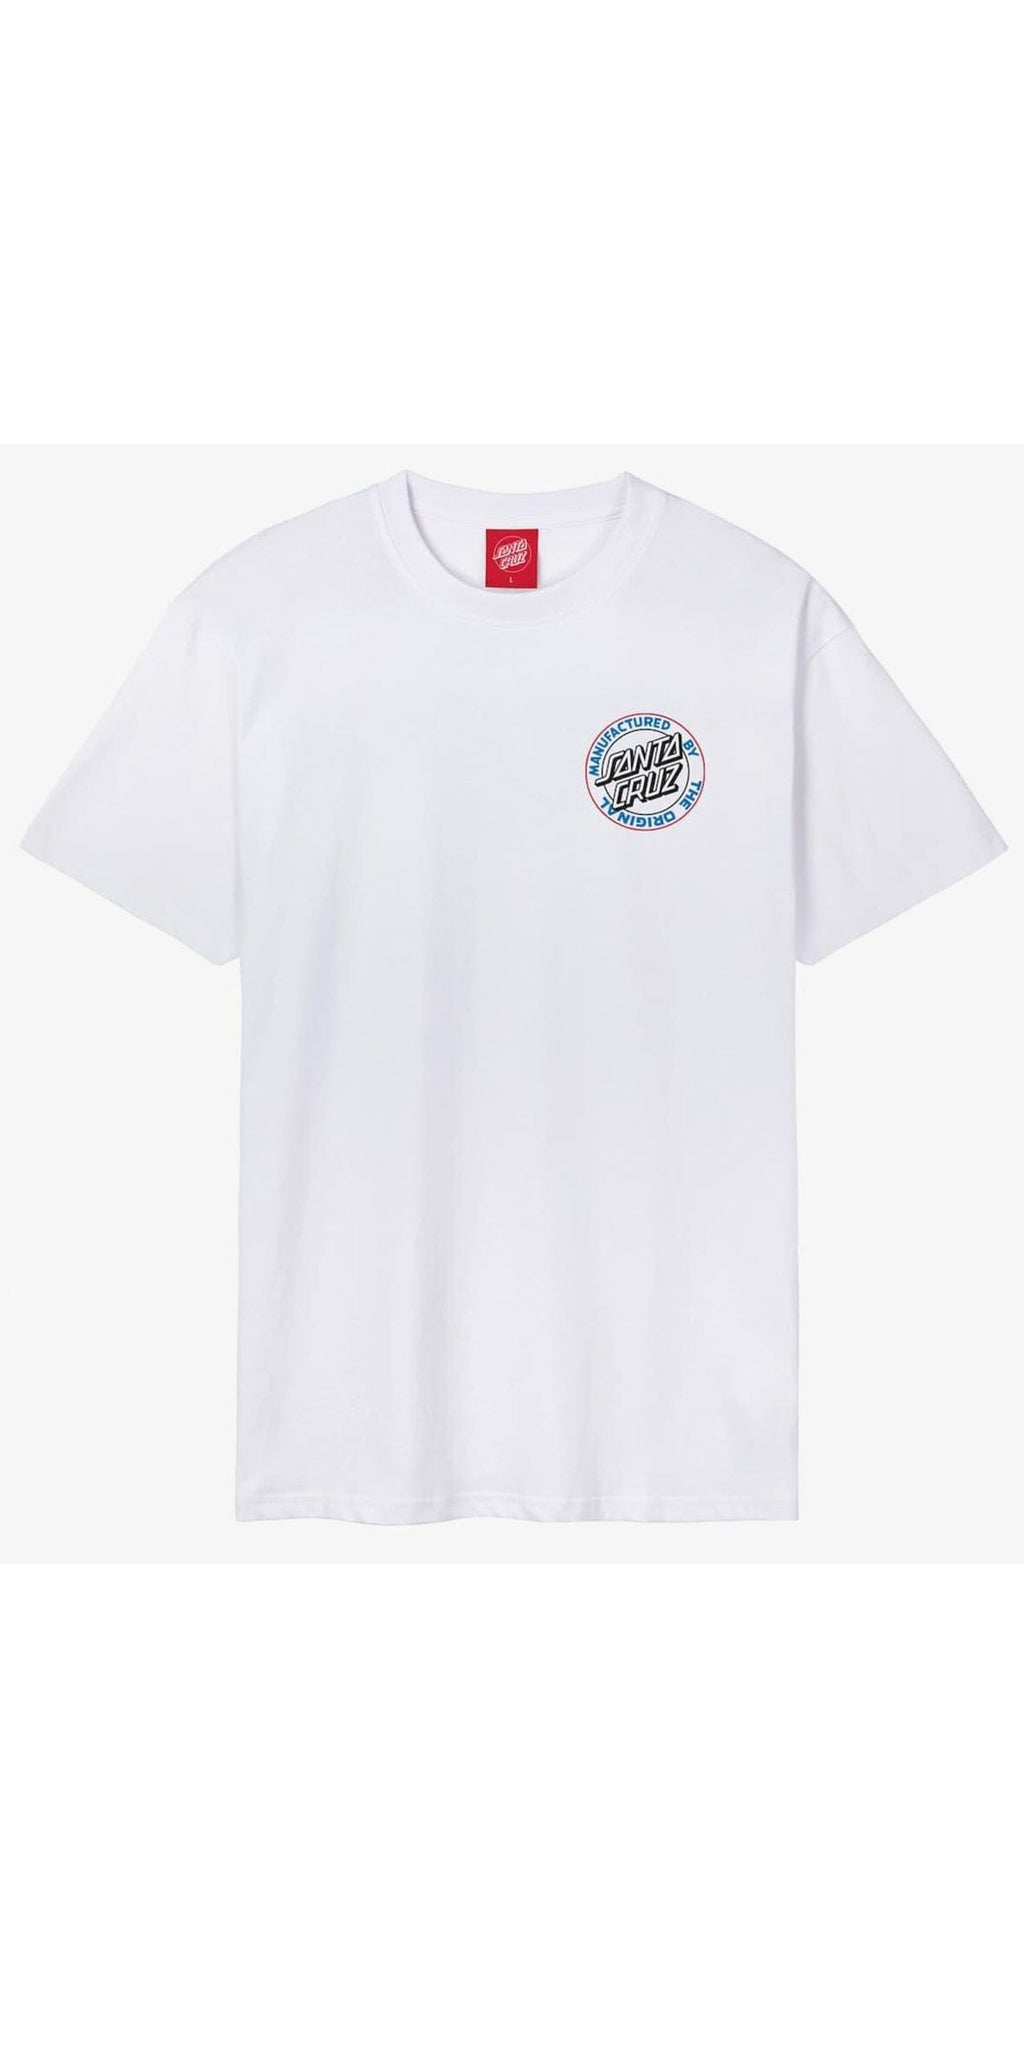 Santa Cruz Natas Screaming Panther Men's T-Shirt - Camiseta Ropa Santa Cruz Skateboards 